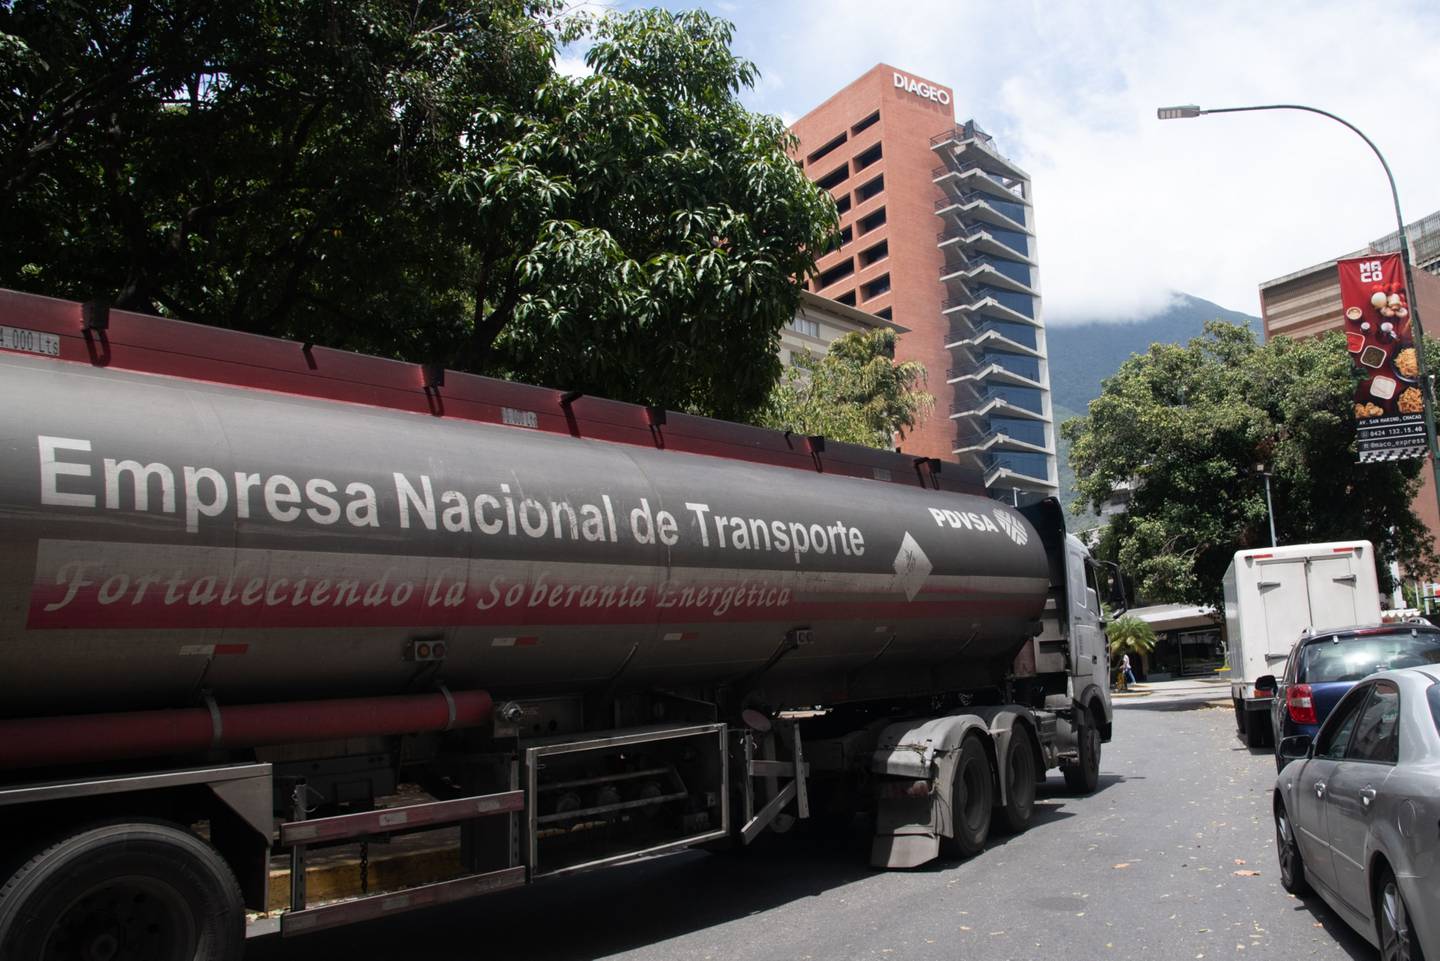 A PDVSA fuel truck drives through the La Castellana neighborhood of Caracas. Photographer: Carolina Cabral Fernandez/Bloomberg